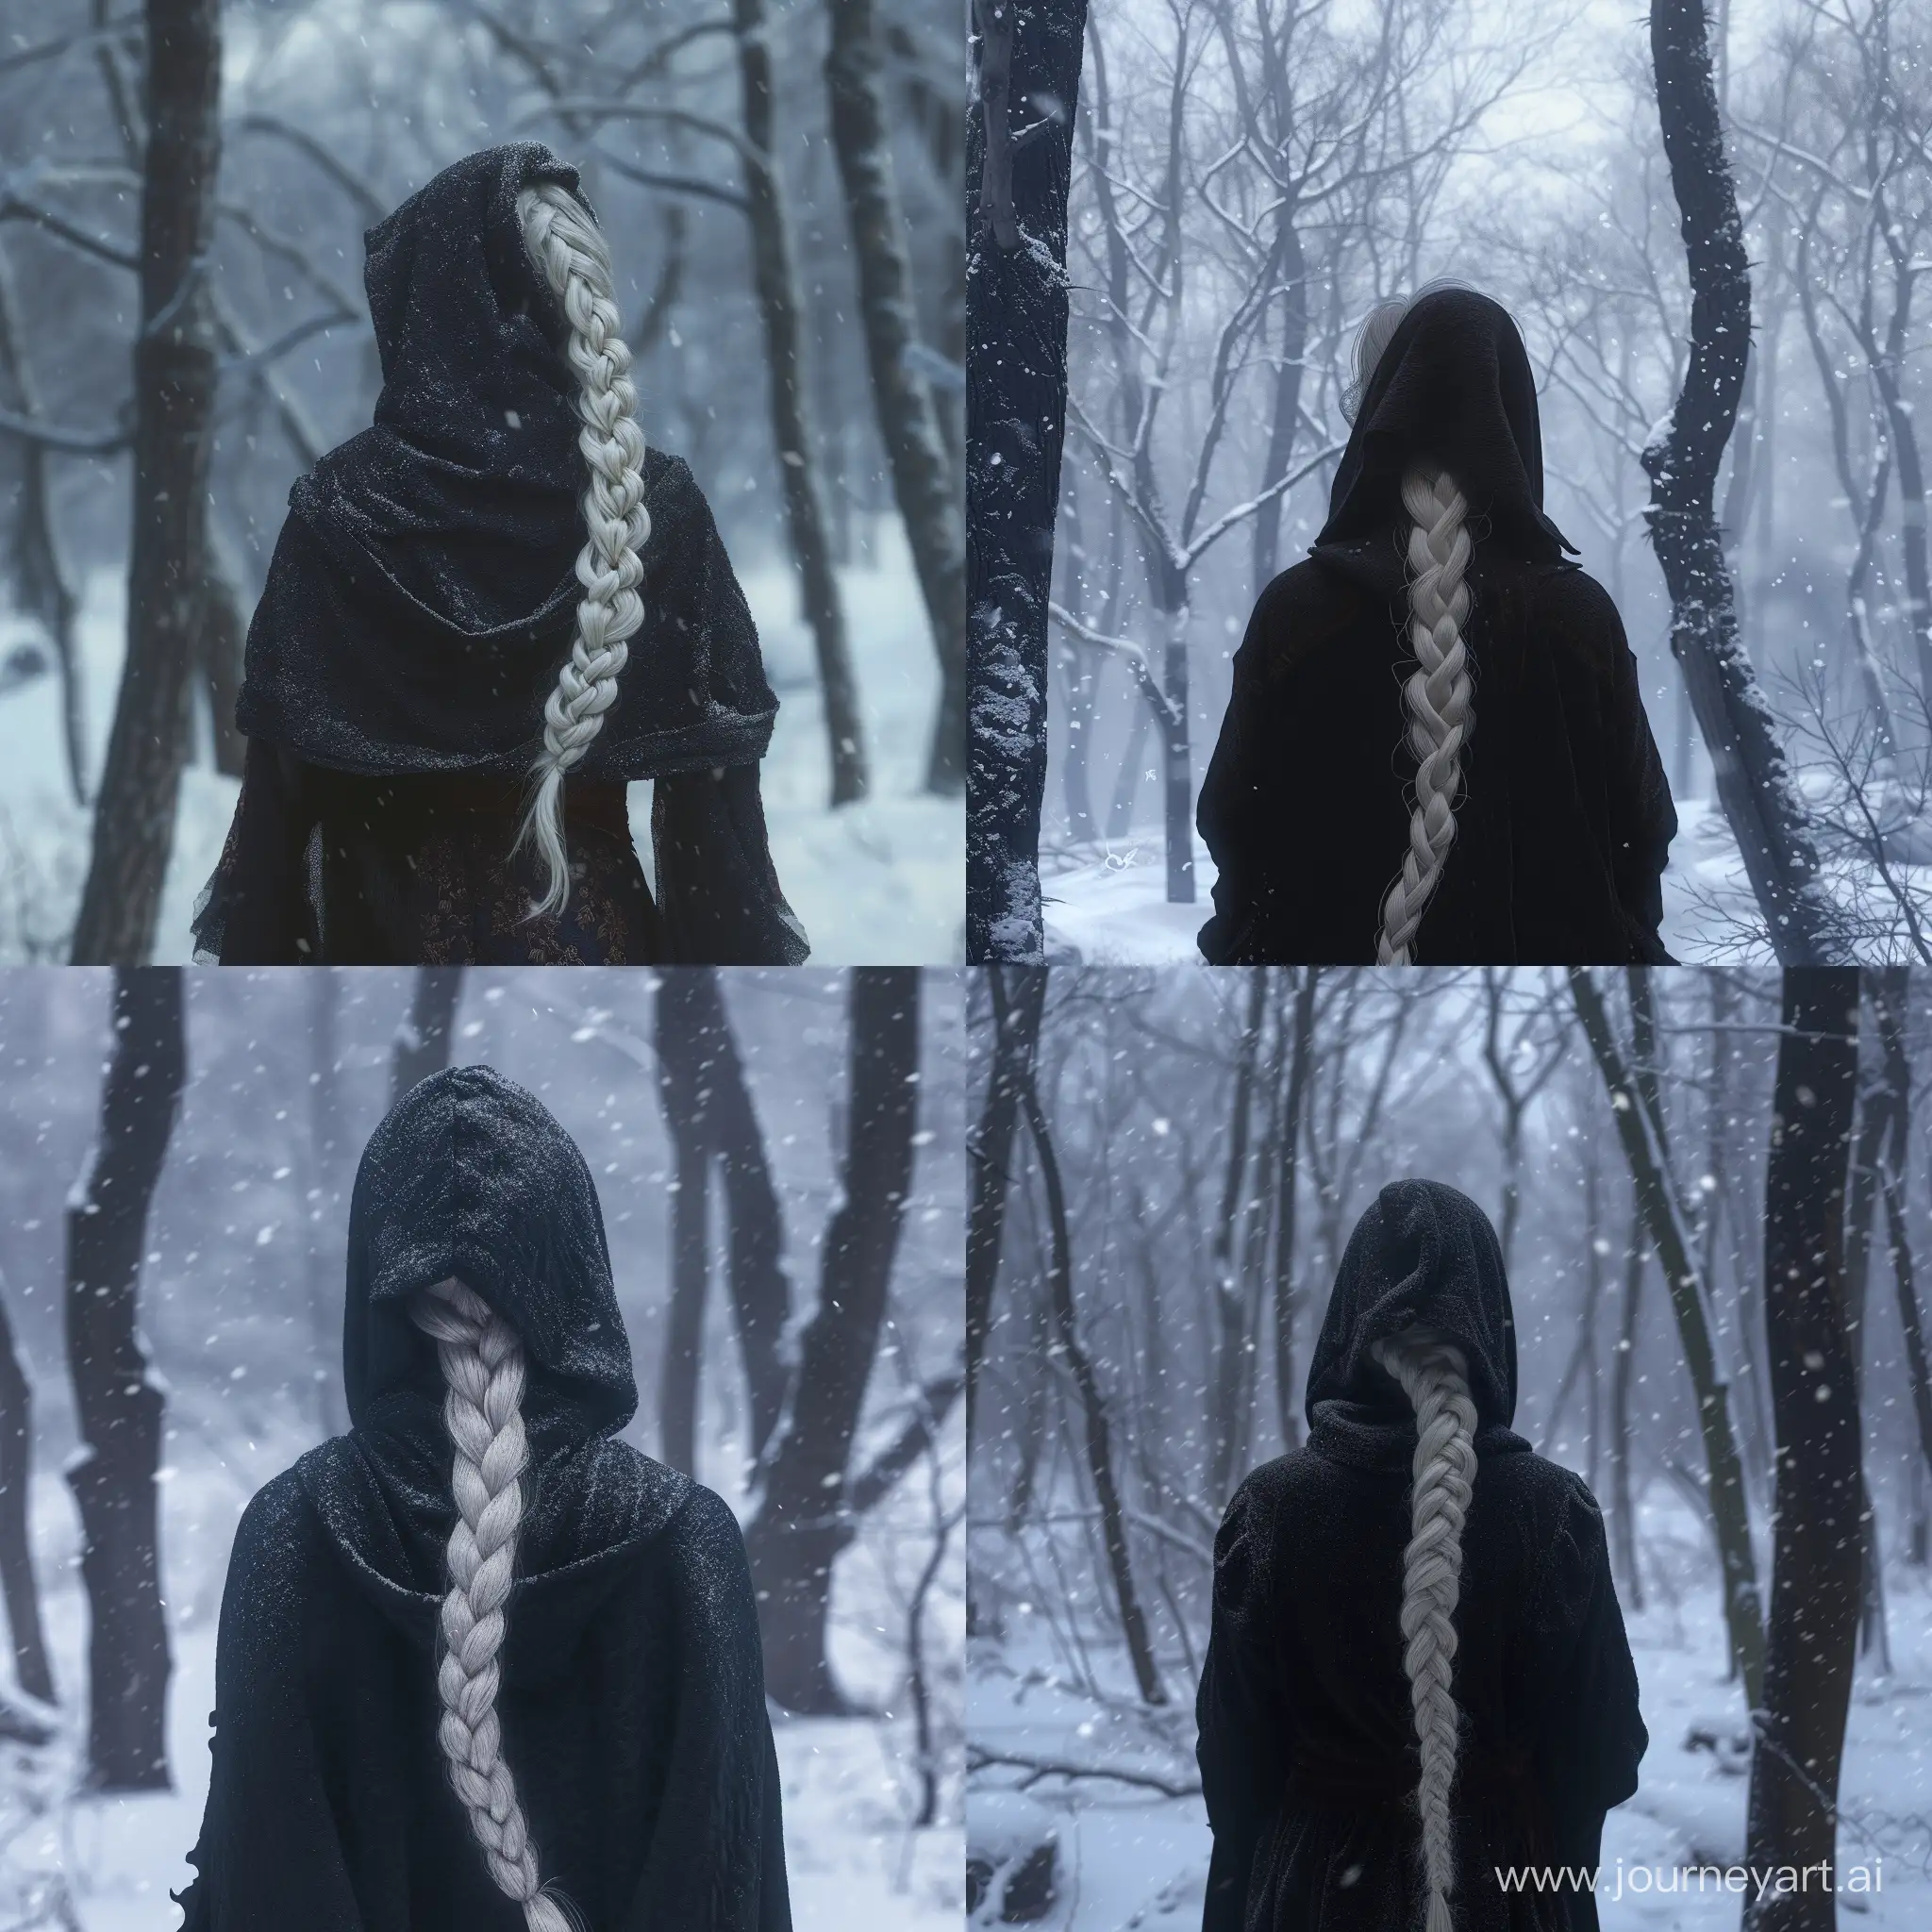 Mystical-Winter-Portrait-Enigmatic-Girl-in-Dark-Hooded-Robe-Amidst-Snowstorm